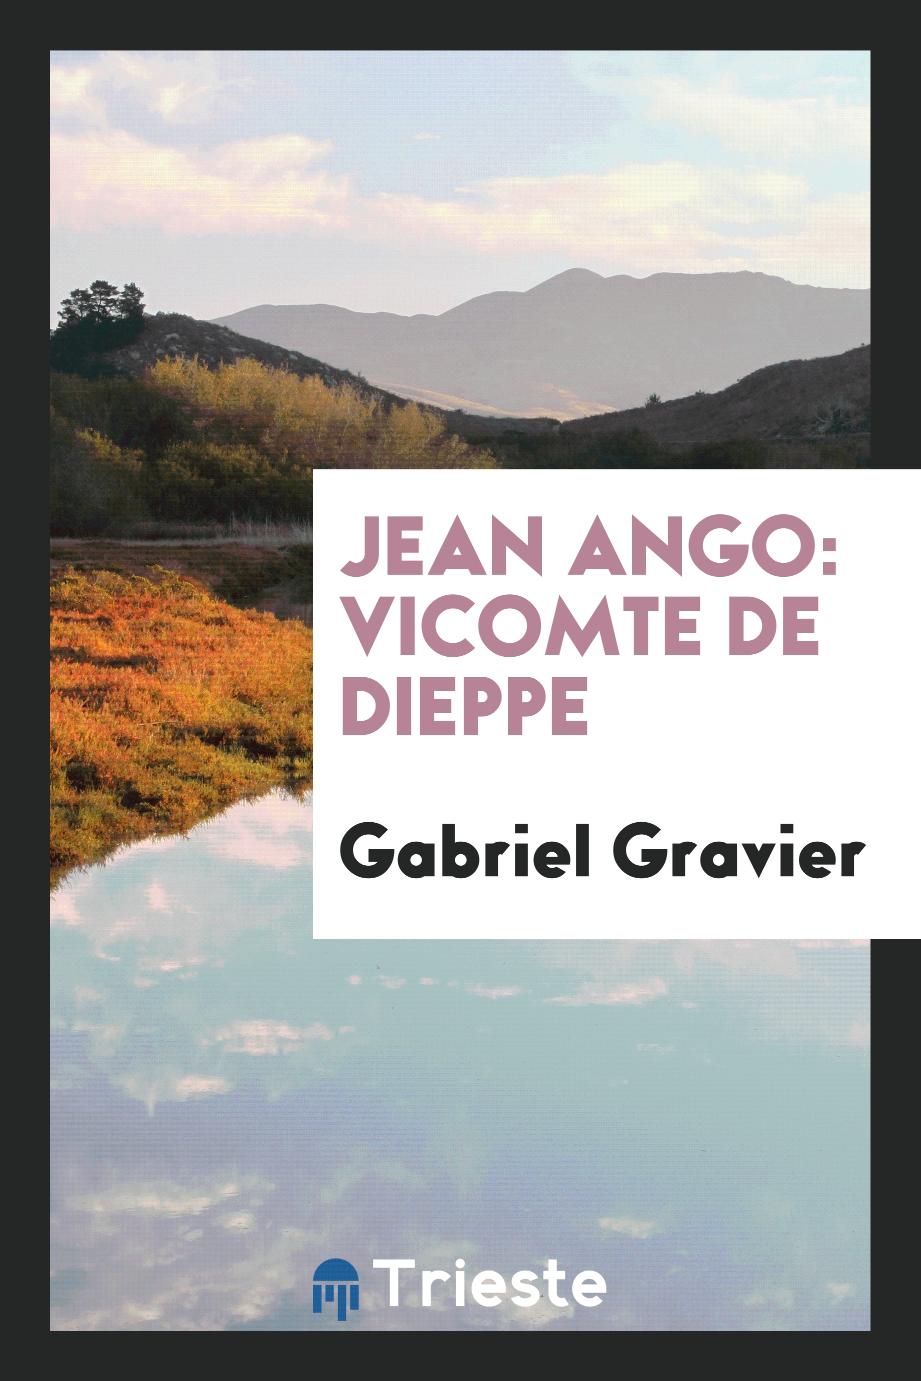 Jean Ango: Vicomte de Dieppe